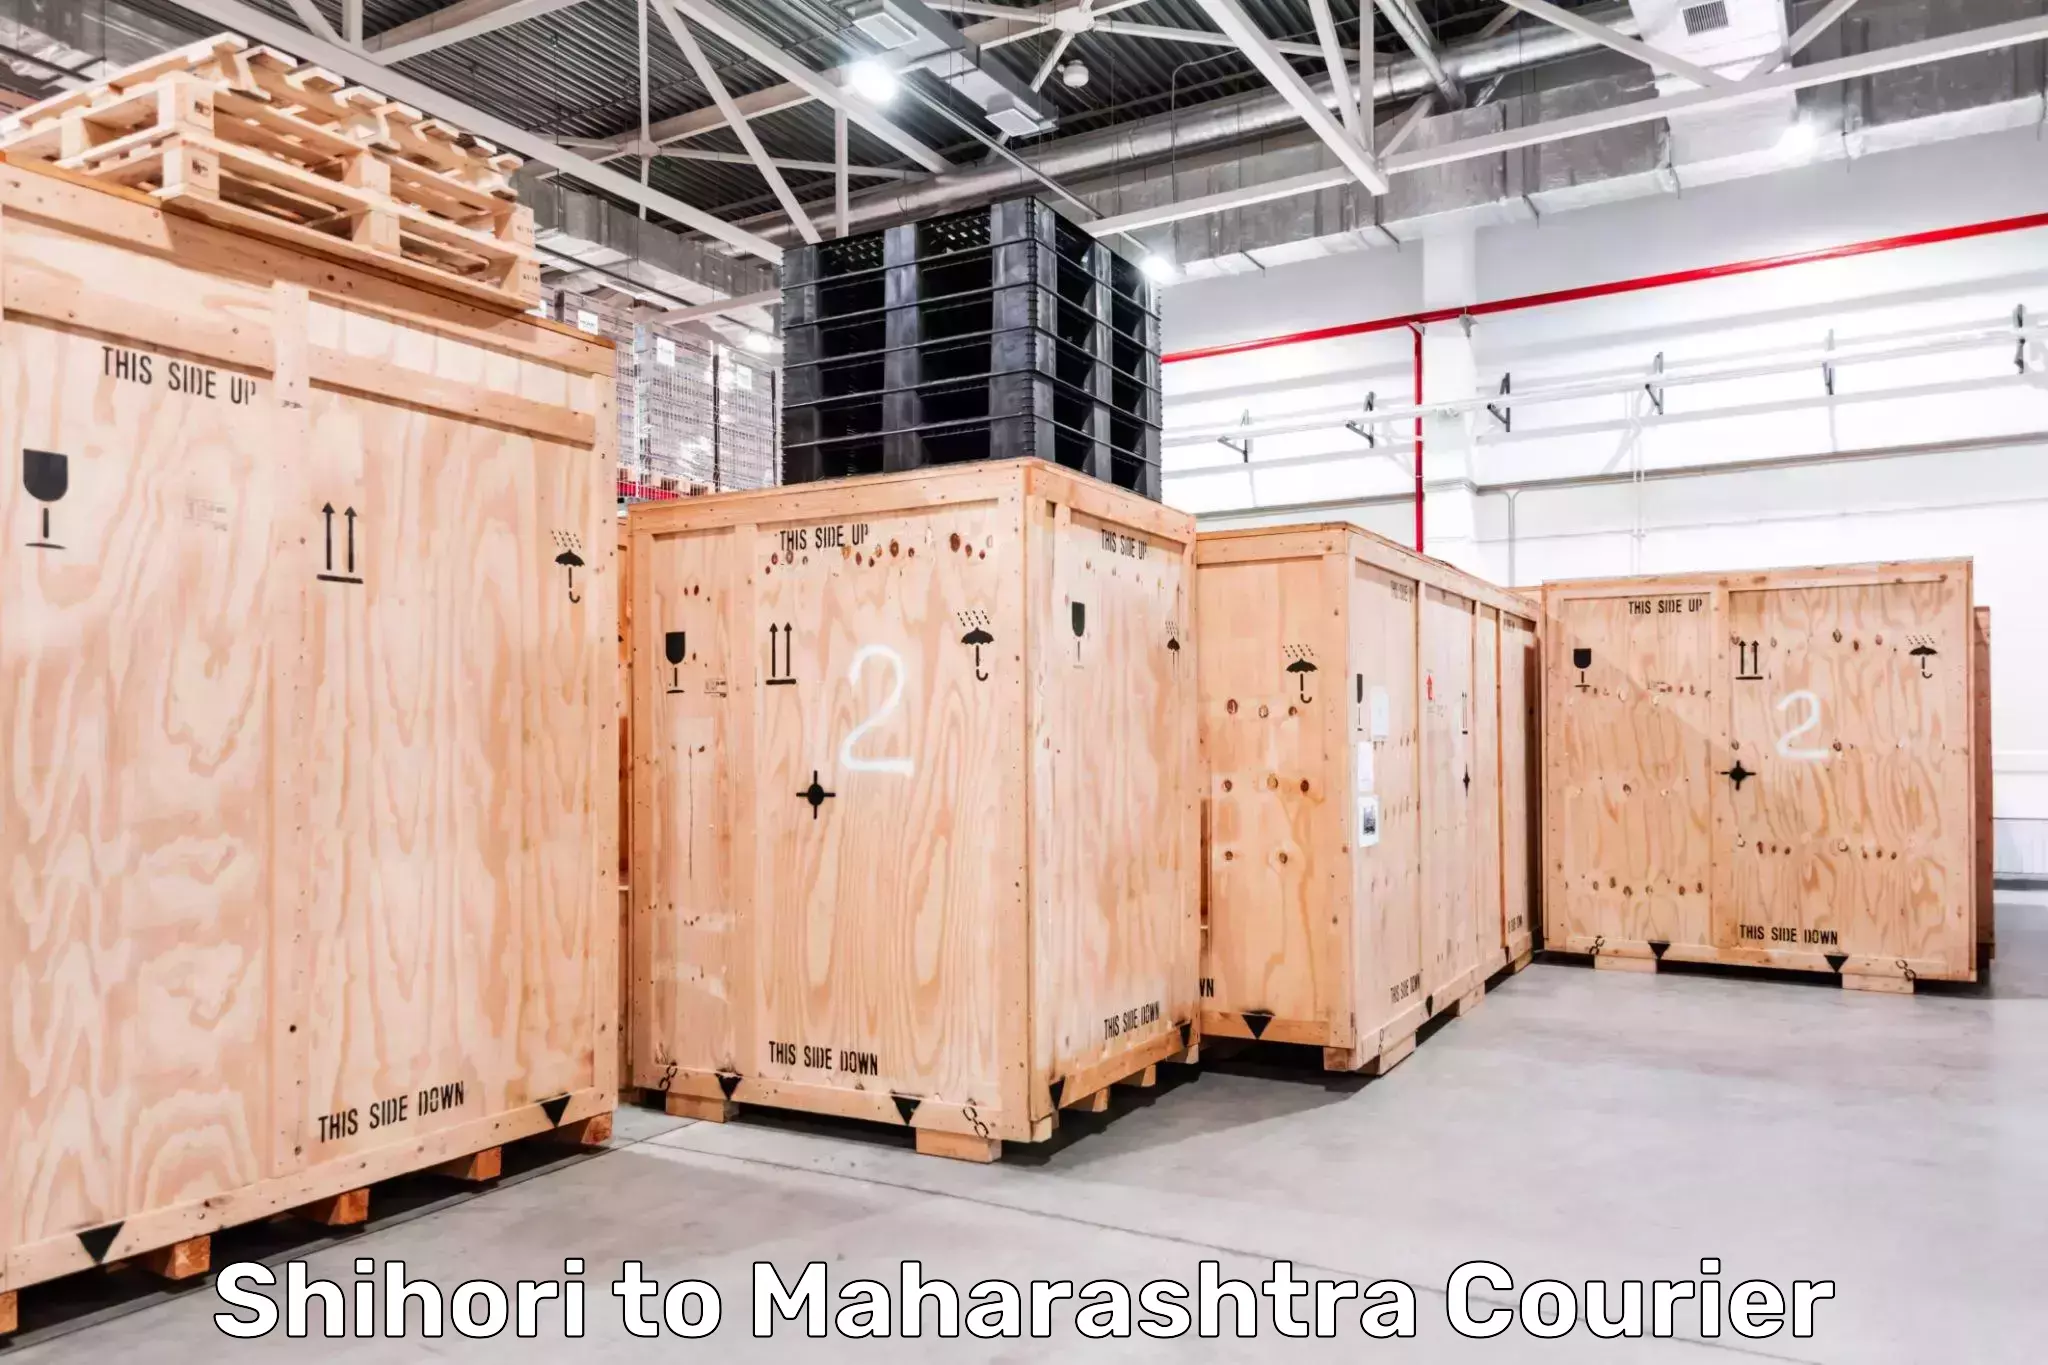 Package forwarding in Shihori to Maharashtra